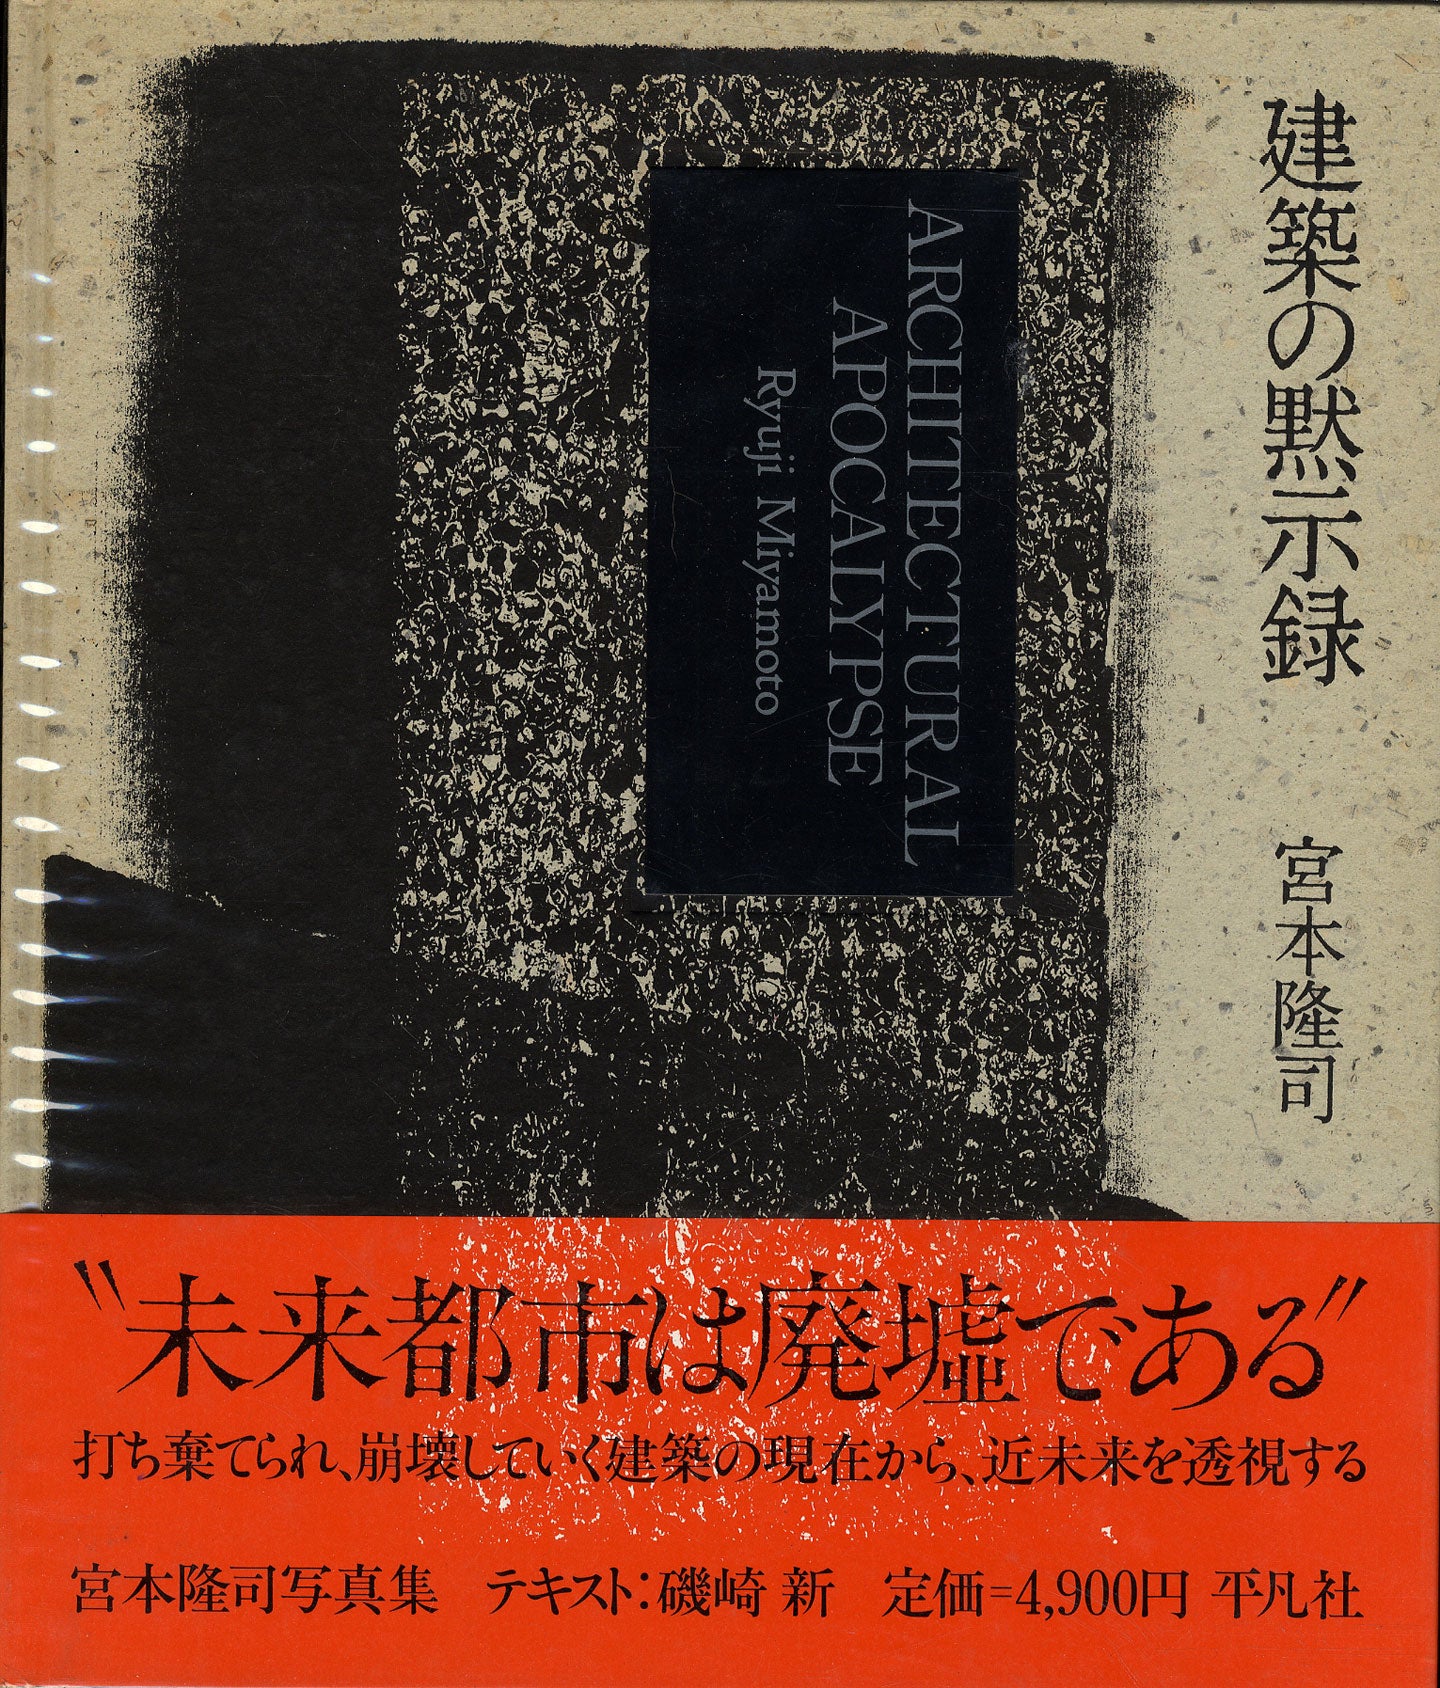 Ryuji Miyamoto: Architectural Apocalypse (First Edition with obi) [SIGNED]